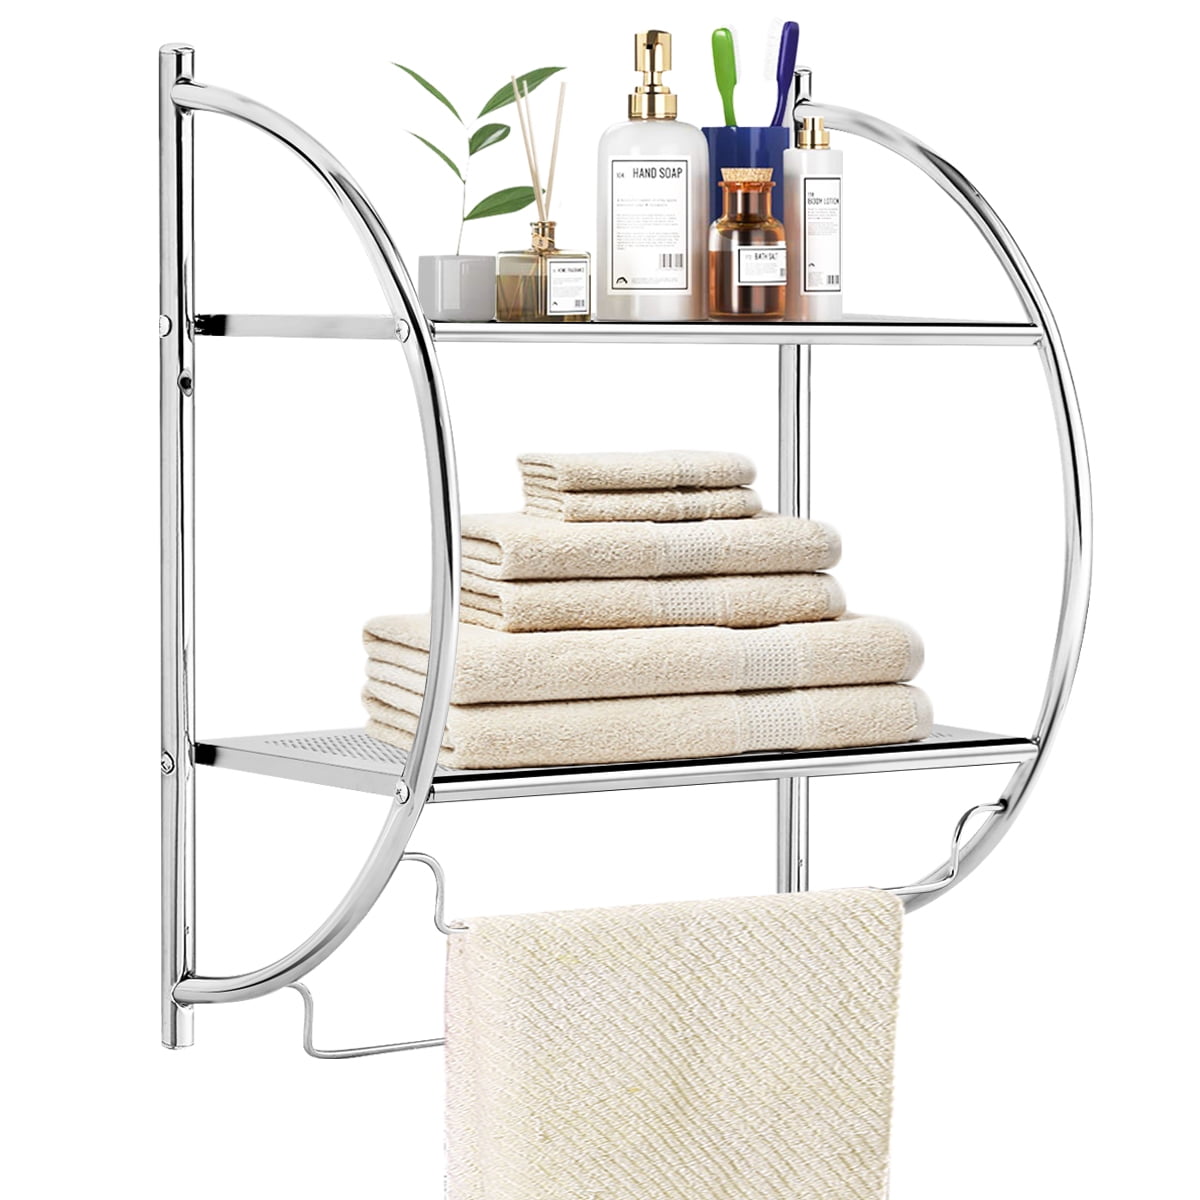 Chrome mDesign Metal Wall Mount Towel Rack Holder Organizer with Storage Shelf 